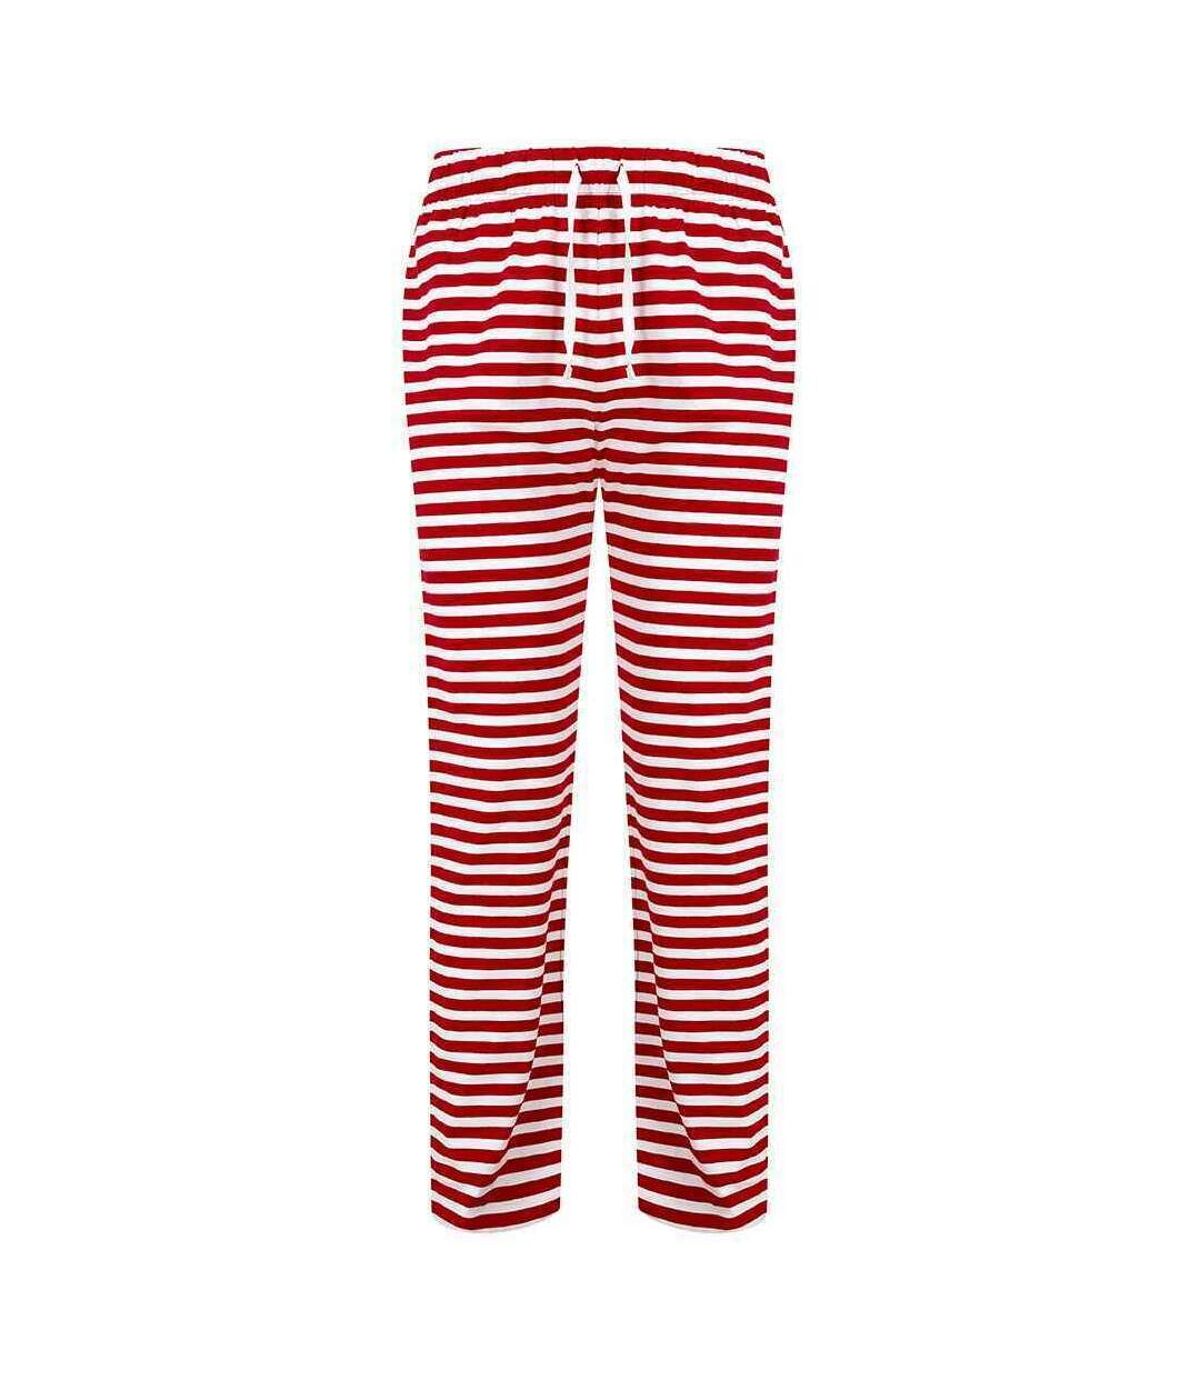 Skinni Fit Mens Lounge Pants (Red/White) - UTRW7996